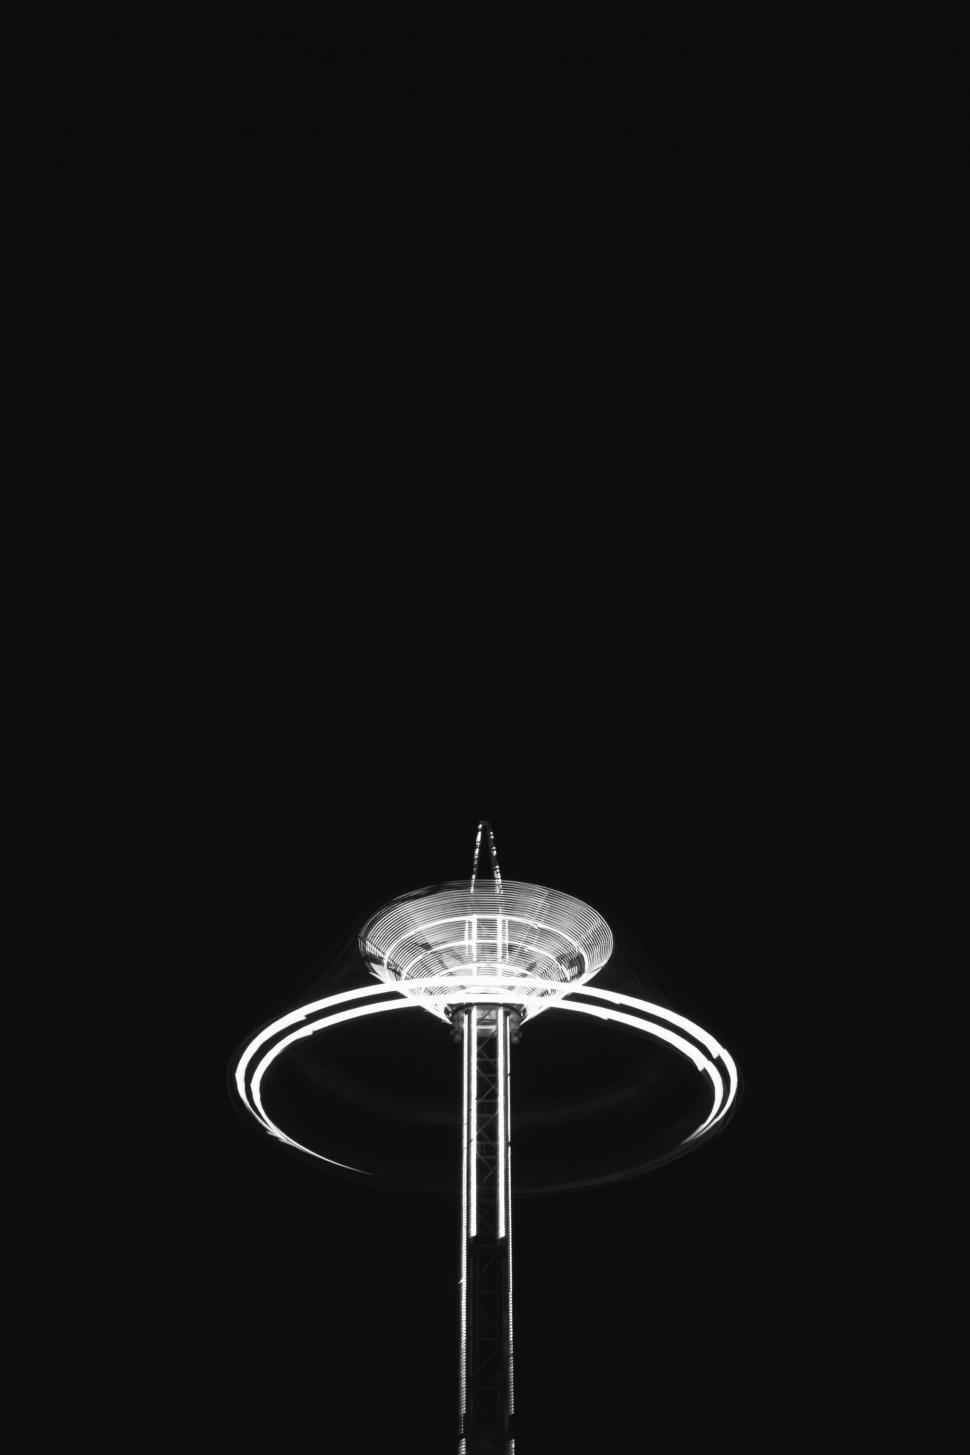 Free Image of A ferris wheel at night 